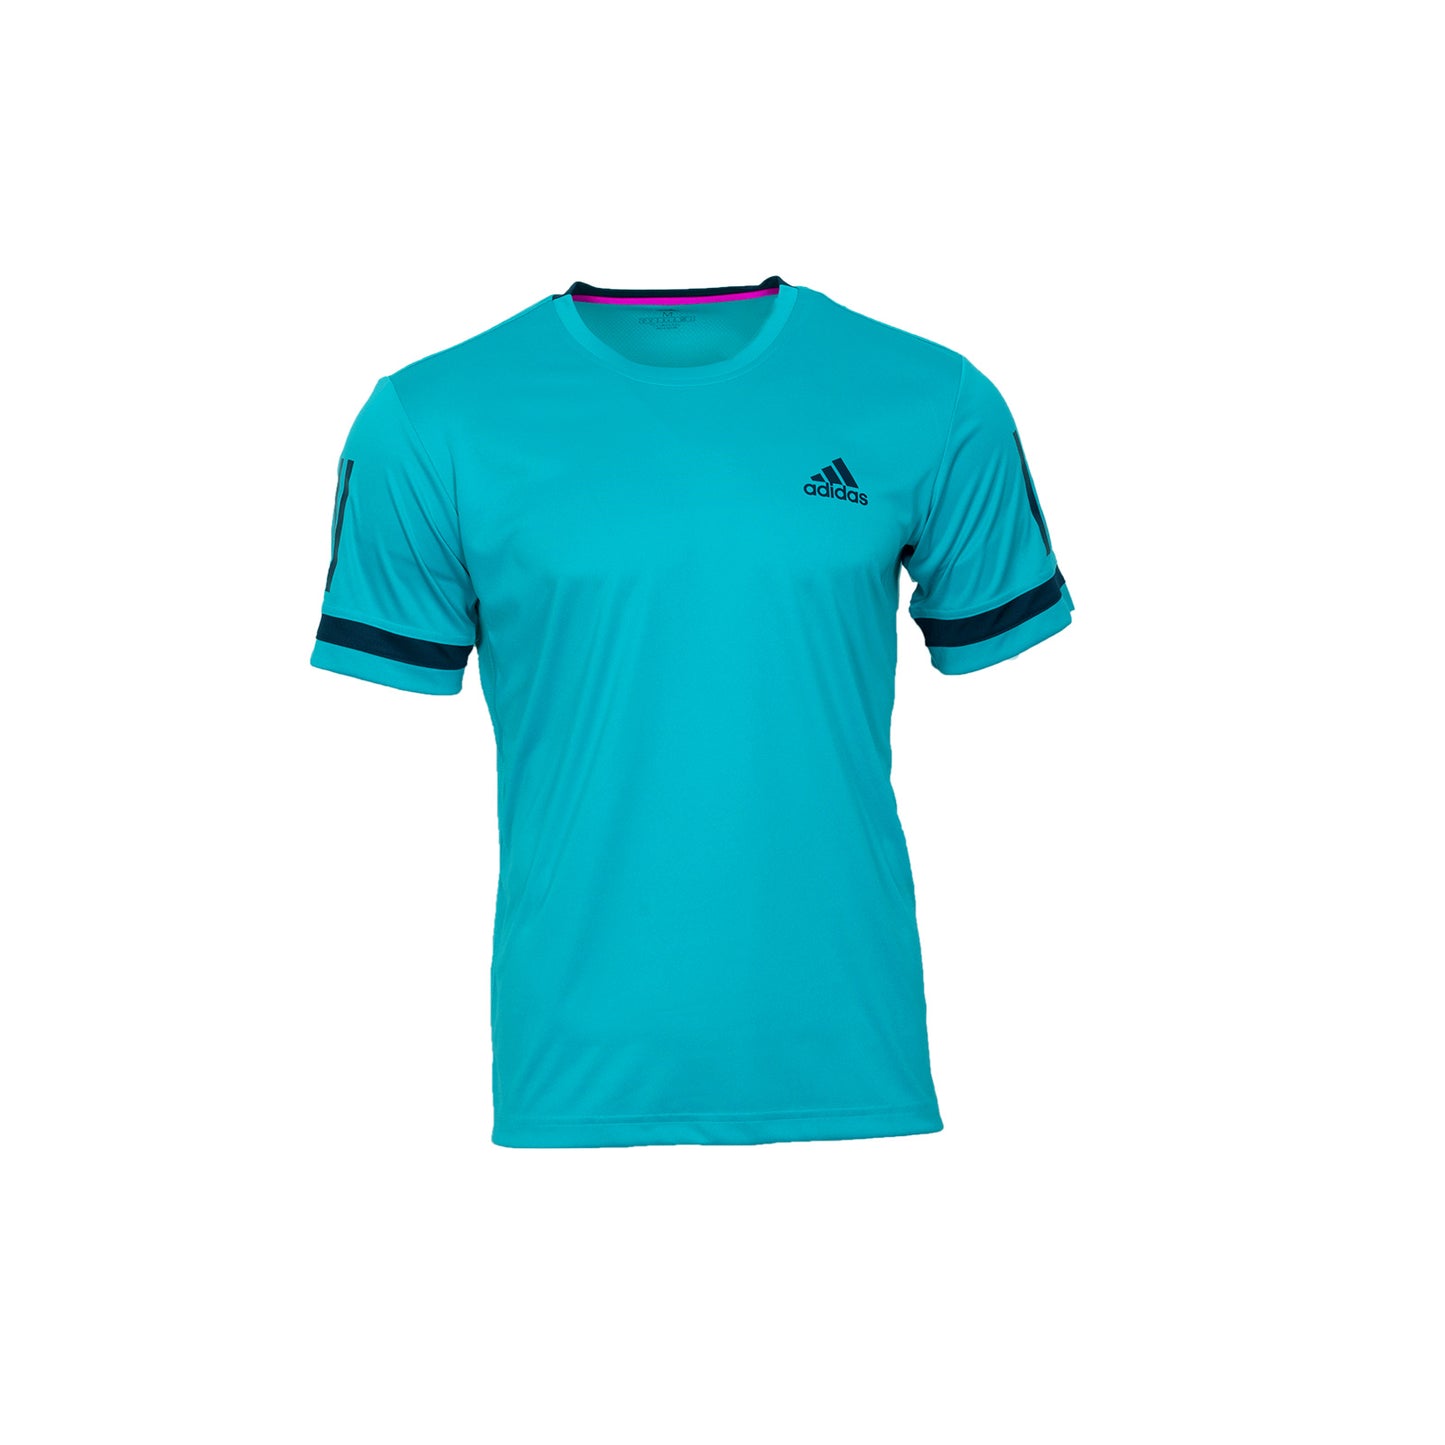 Adidas CLUB 3 Stripes Herren Tennis T-Shirt Sportshirt Climacool türkis D93023 Blau S